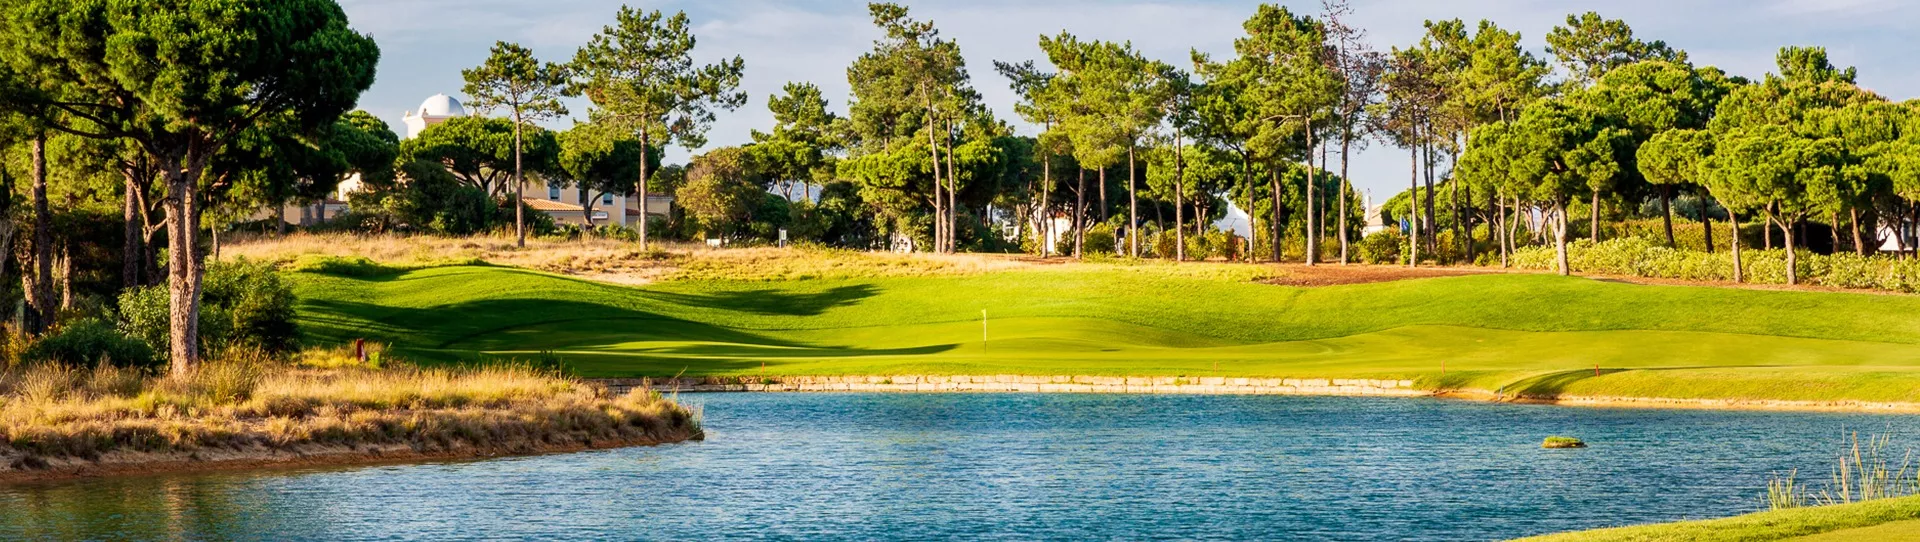 Portugal golf courses - Quinta do Lago North - Photo 1